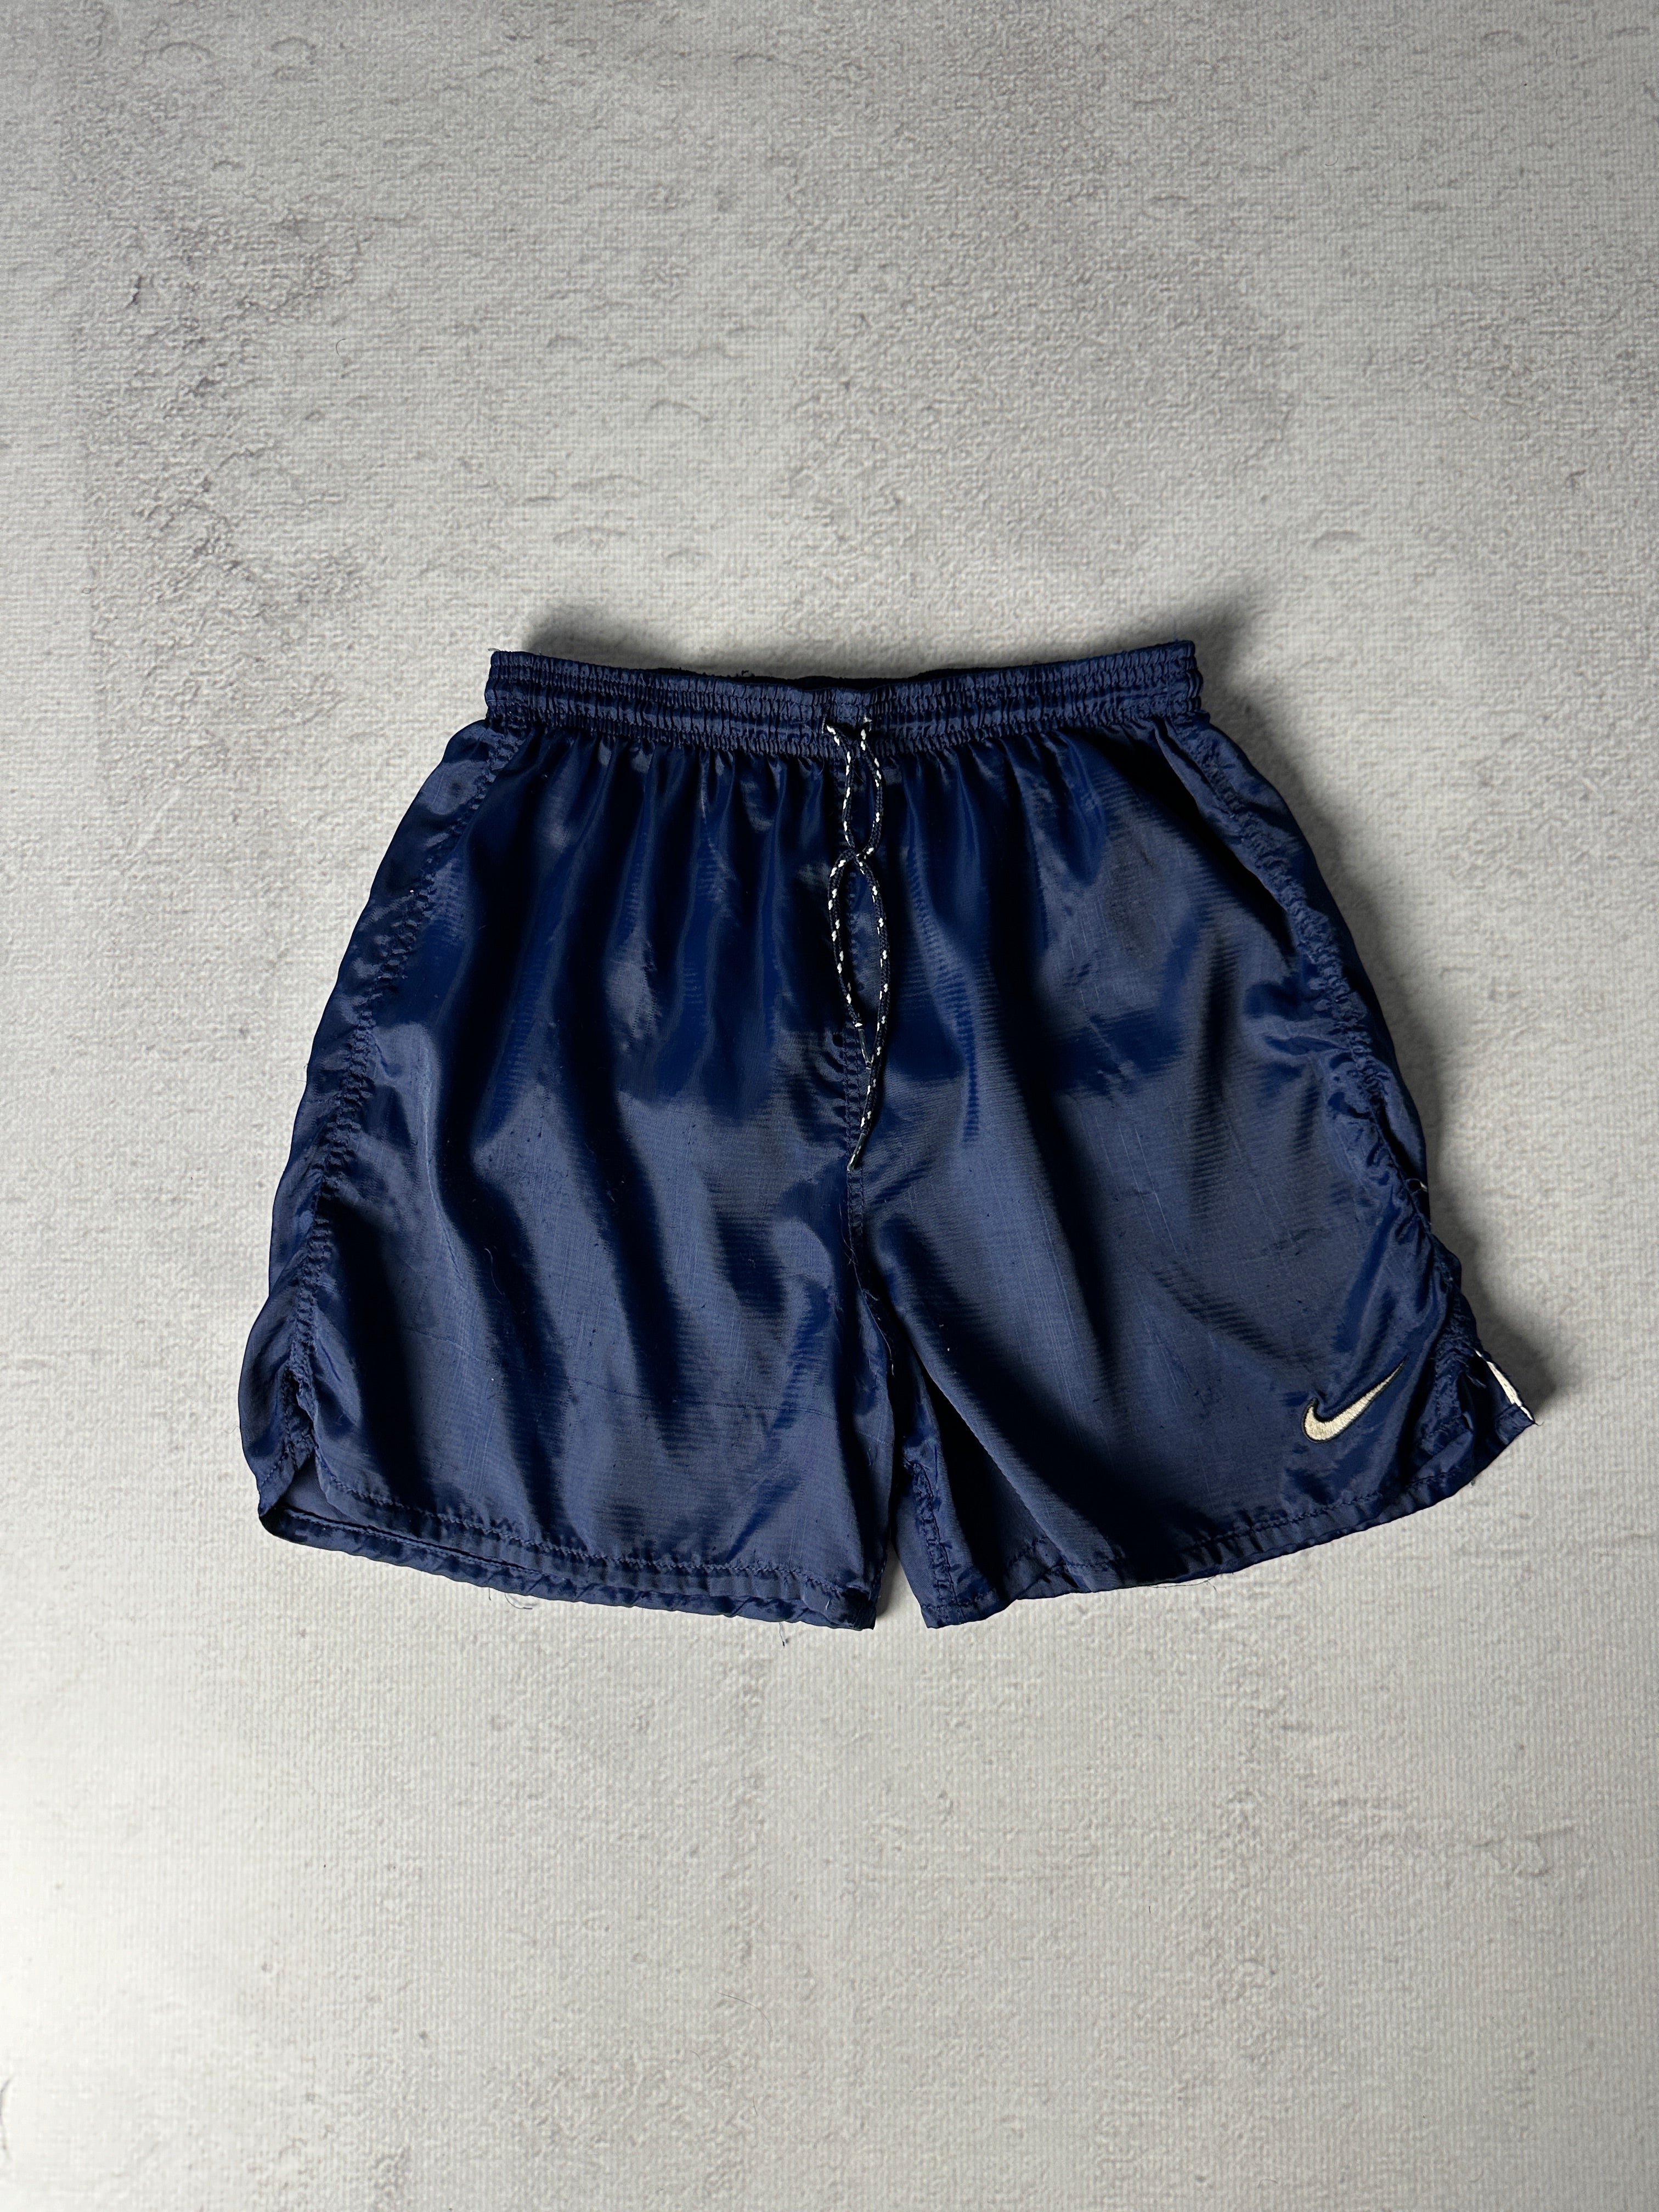 Vintage Nike Track Shorts - Men's Small